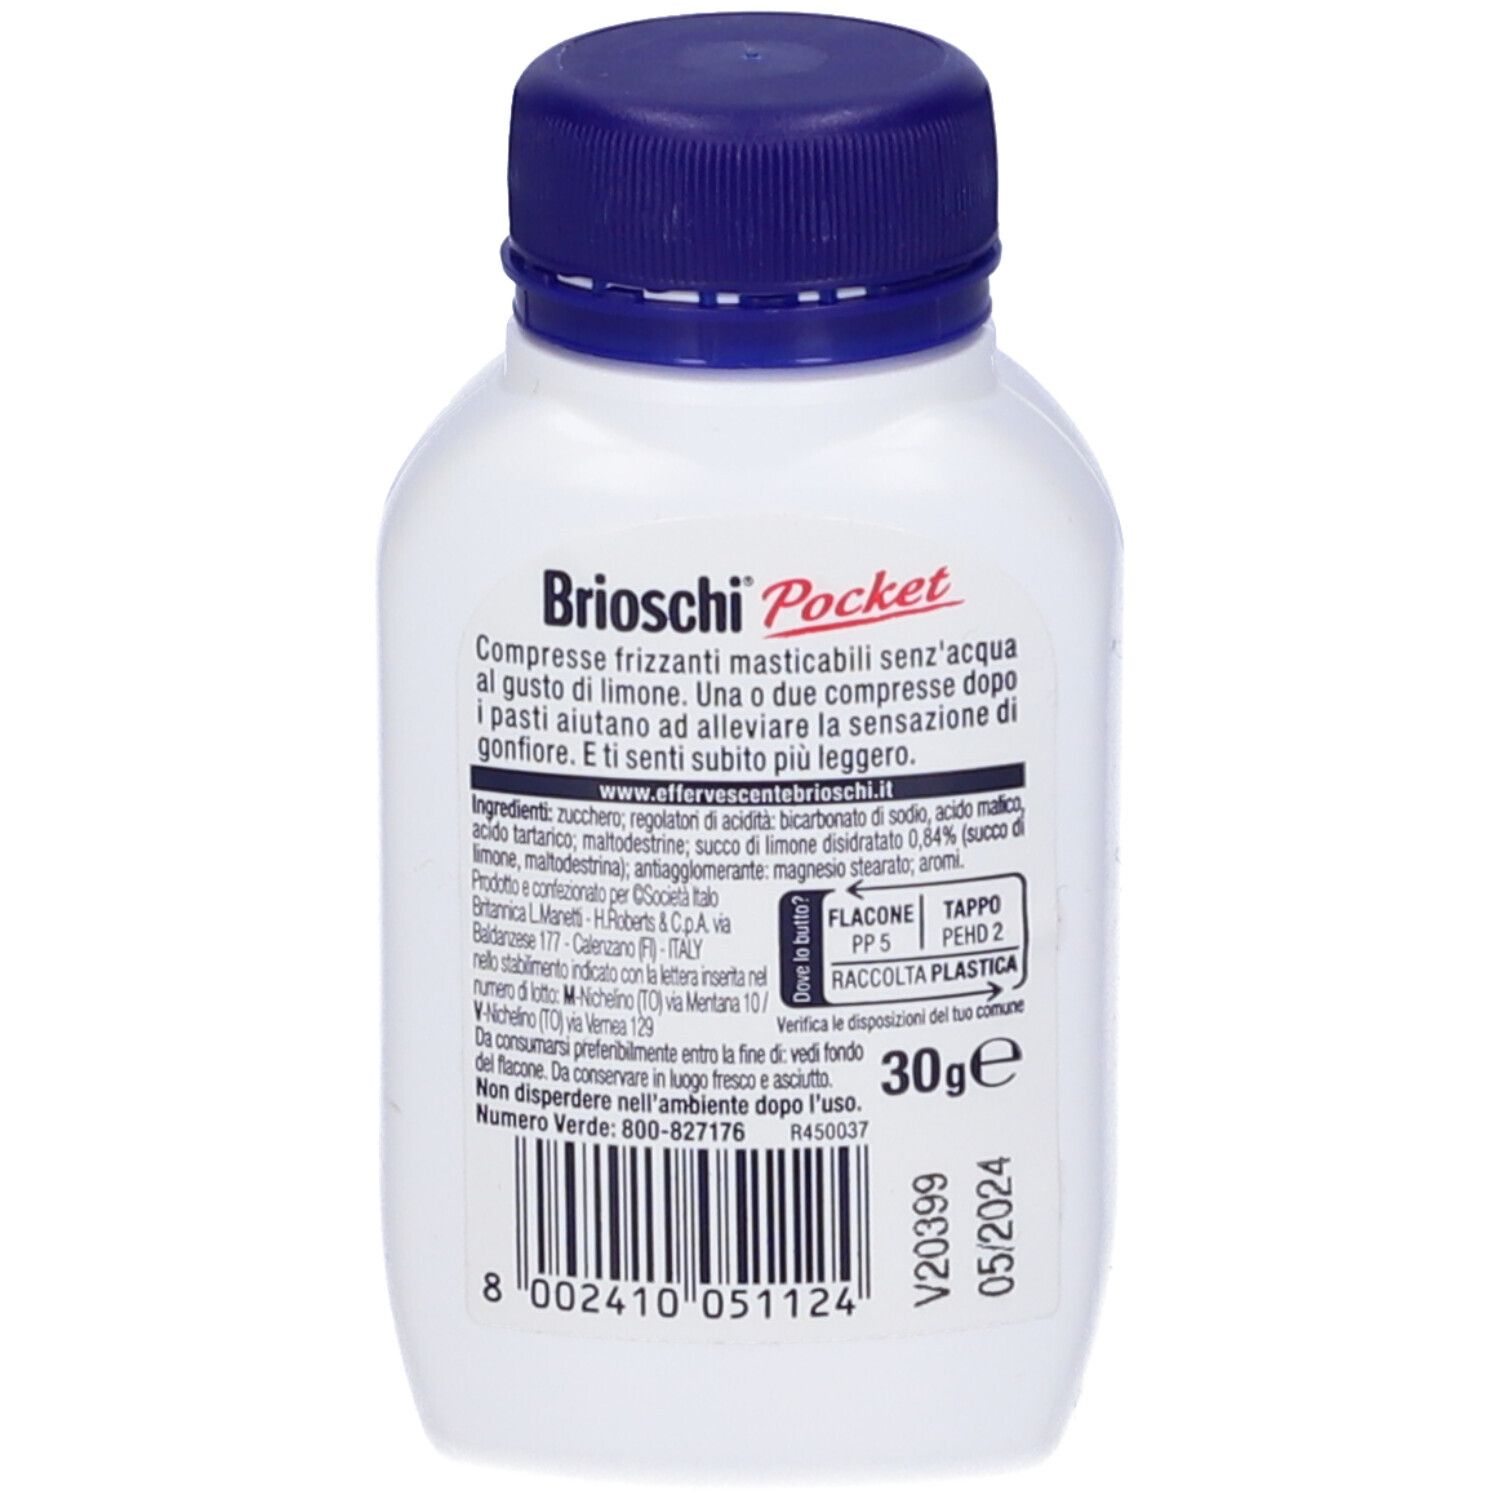 Brioschi® Pocket